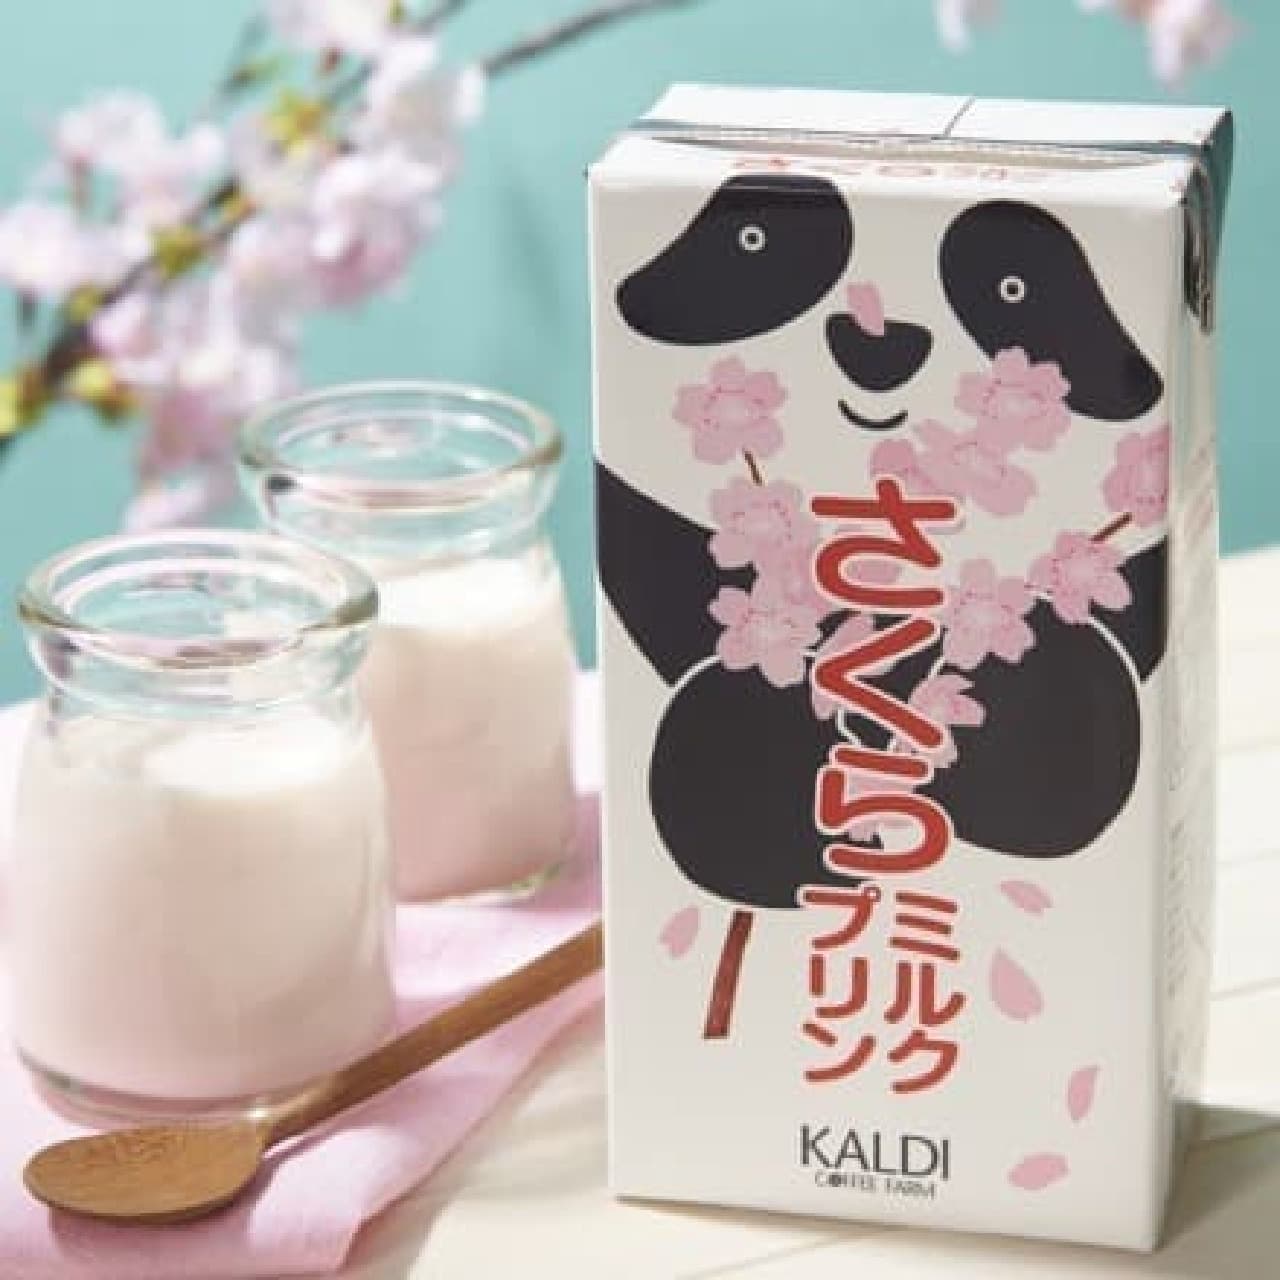 KALDI Coffee Farm "Original Panda Sakura Milk Pudding"